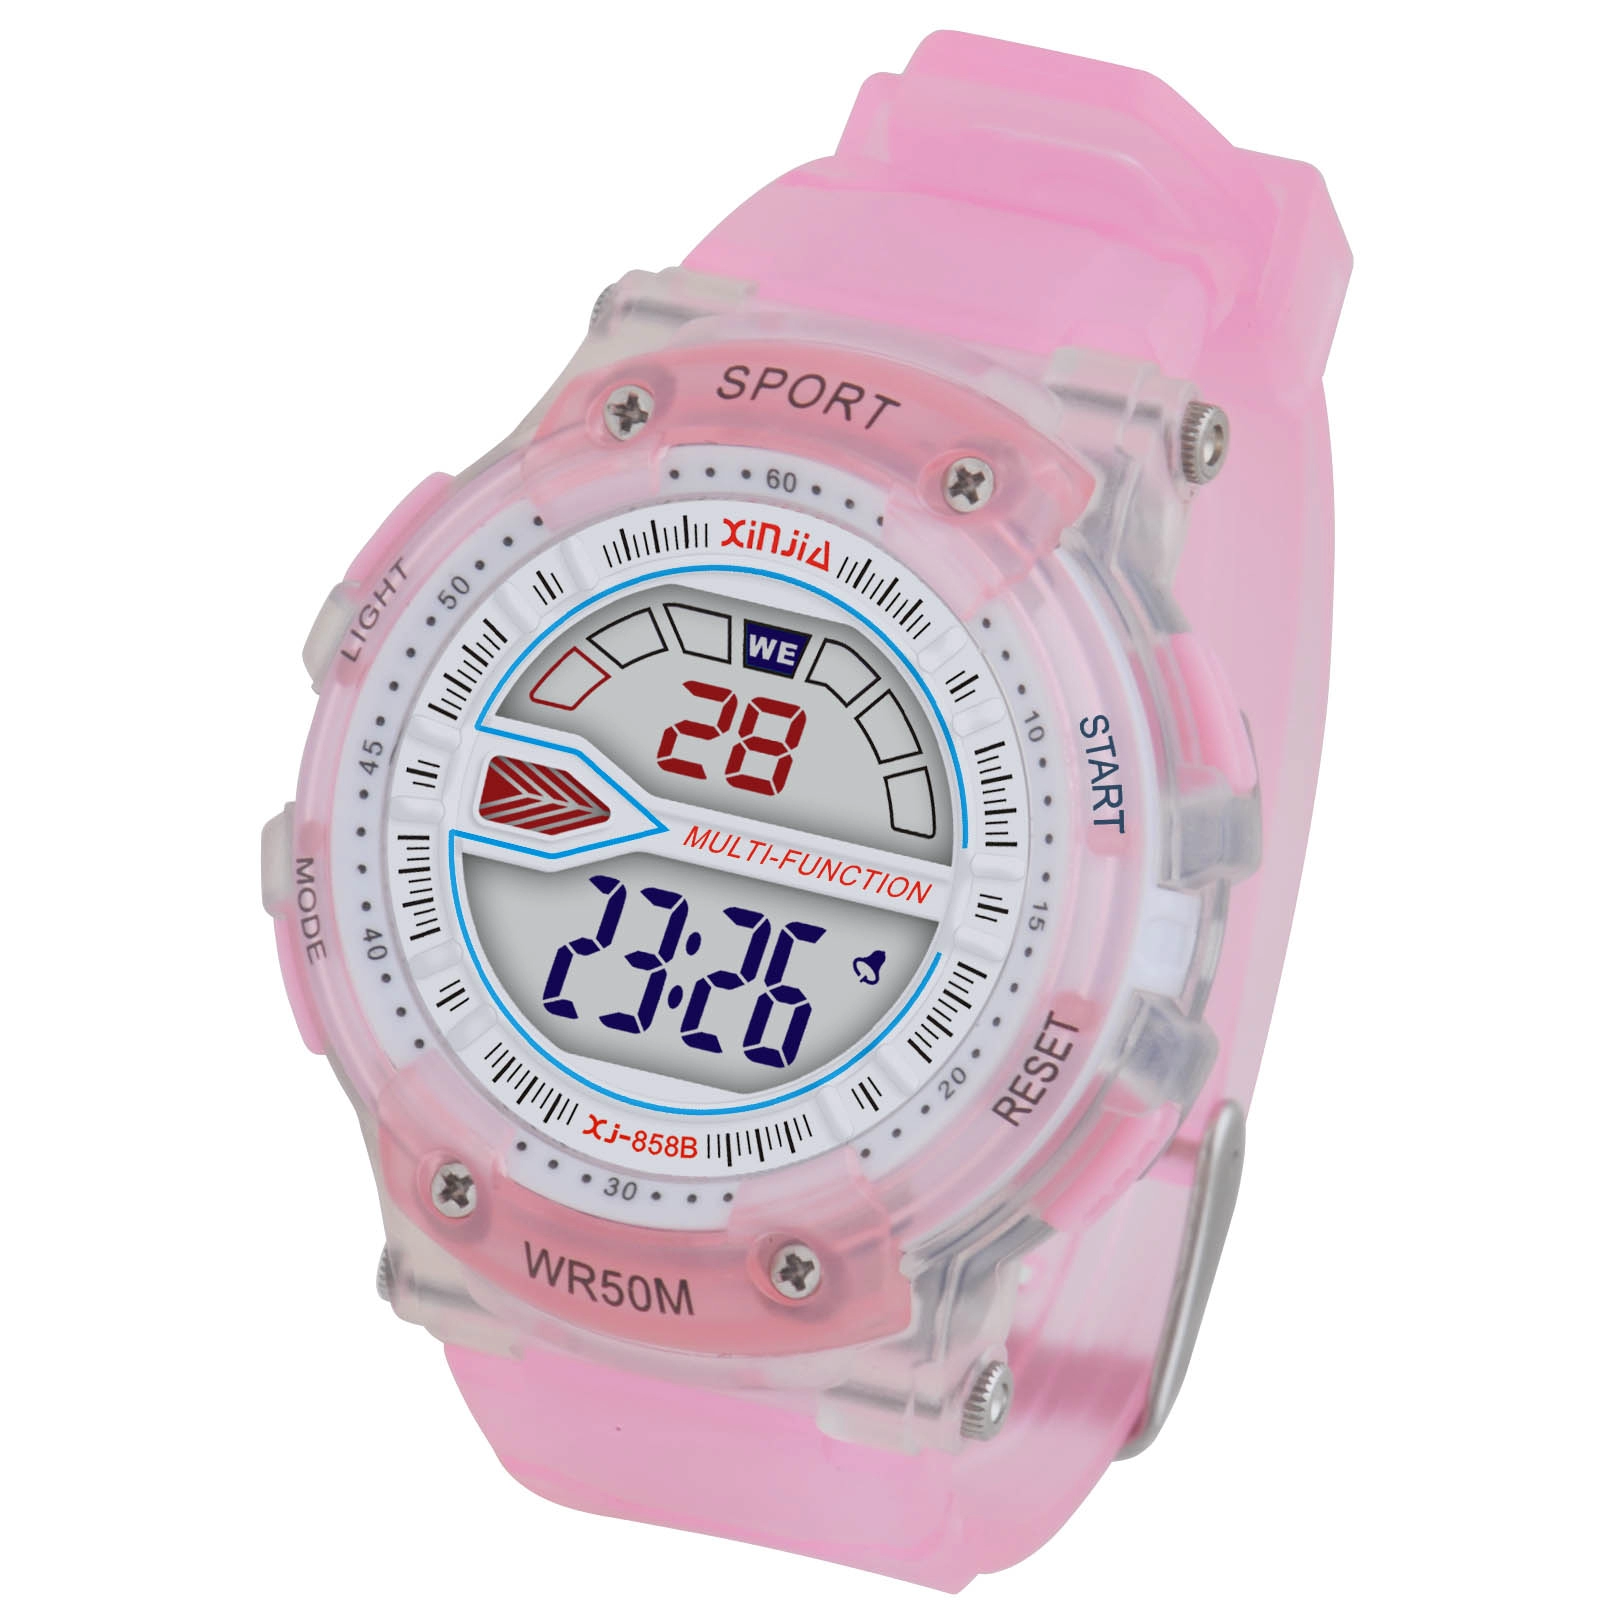 Fashionable Digital Water Resistant Wrist Watch